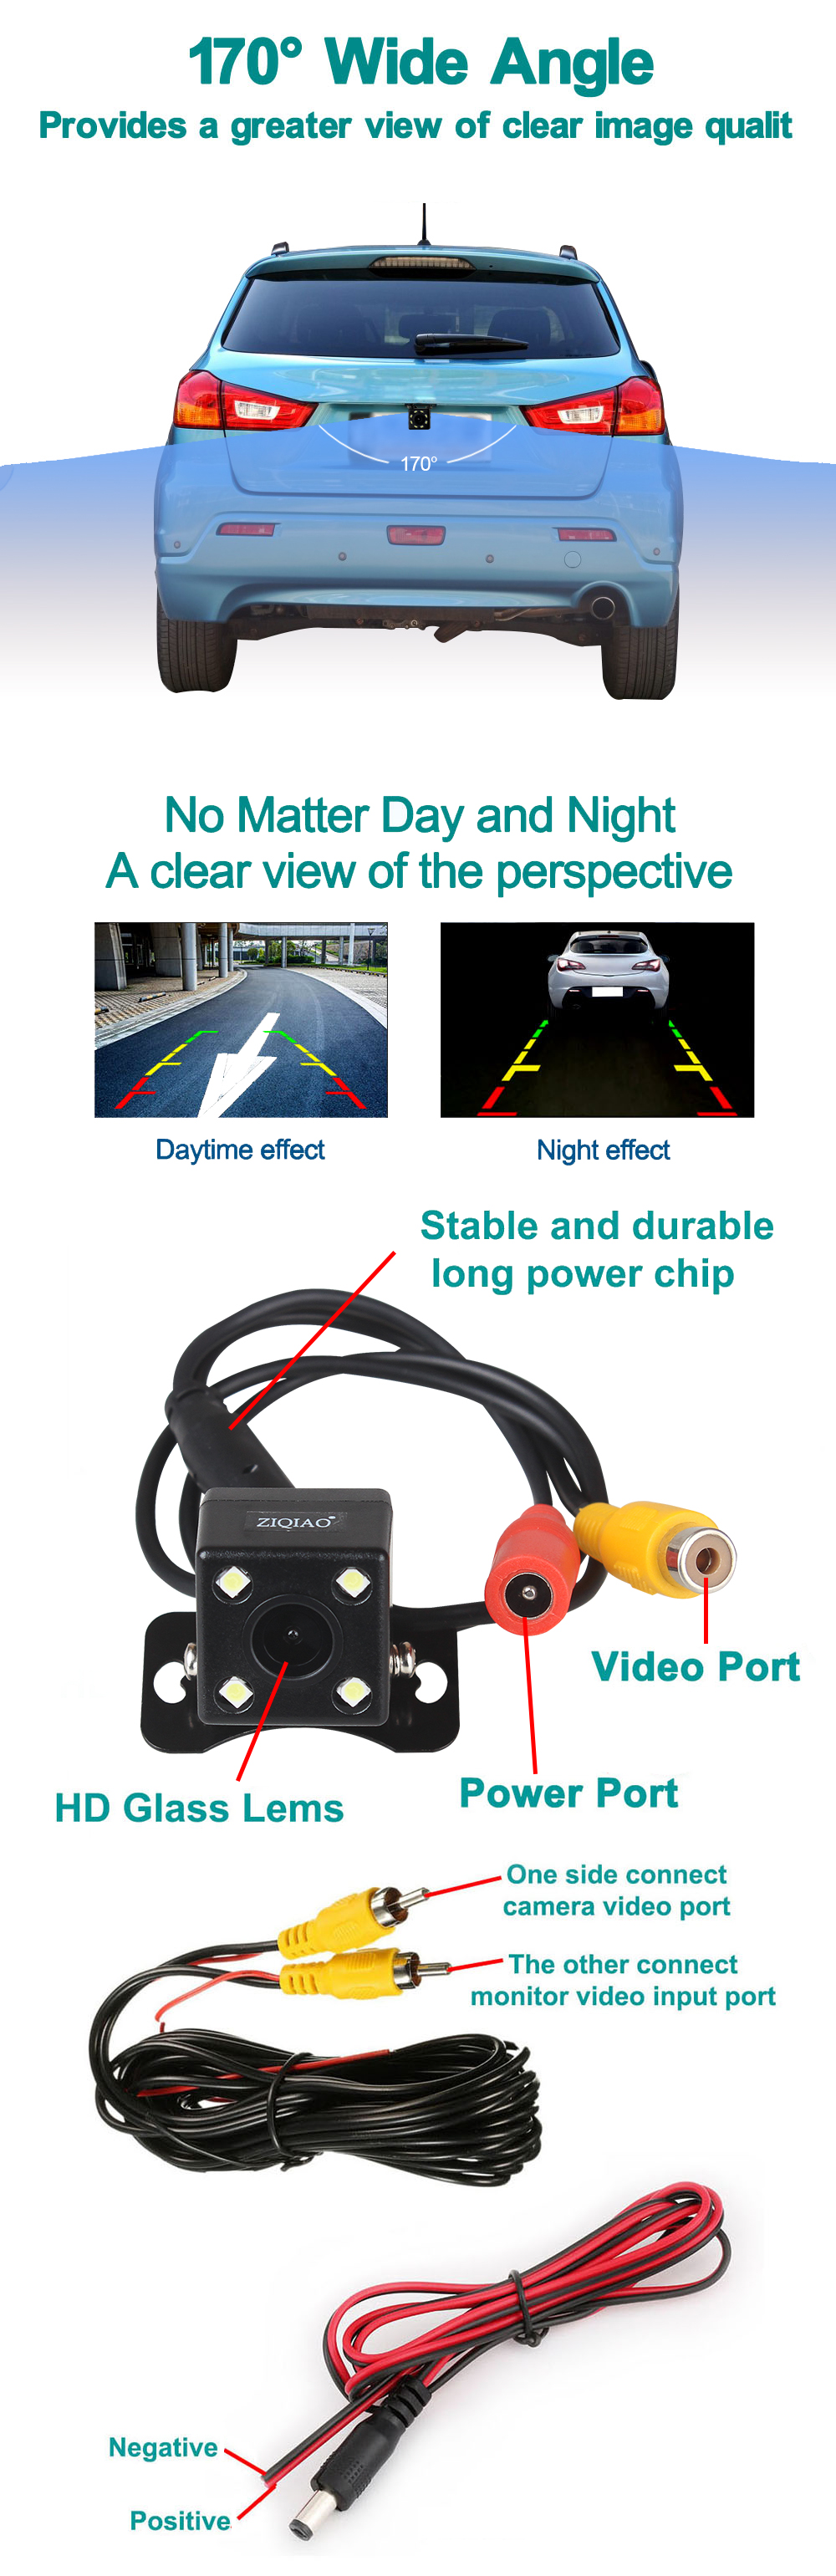 12 LED CCD Imaging Sensor Nachtsicht Rückfahrkamera Wasserdicht 170 Weitwinkel Fahrzeug Backup Parkplatz Kamera 